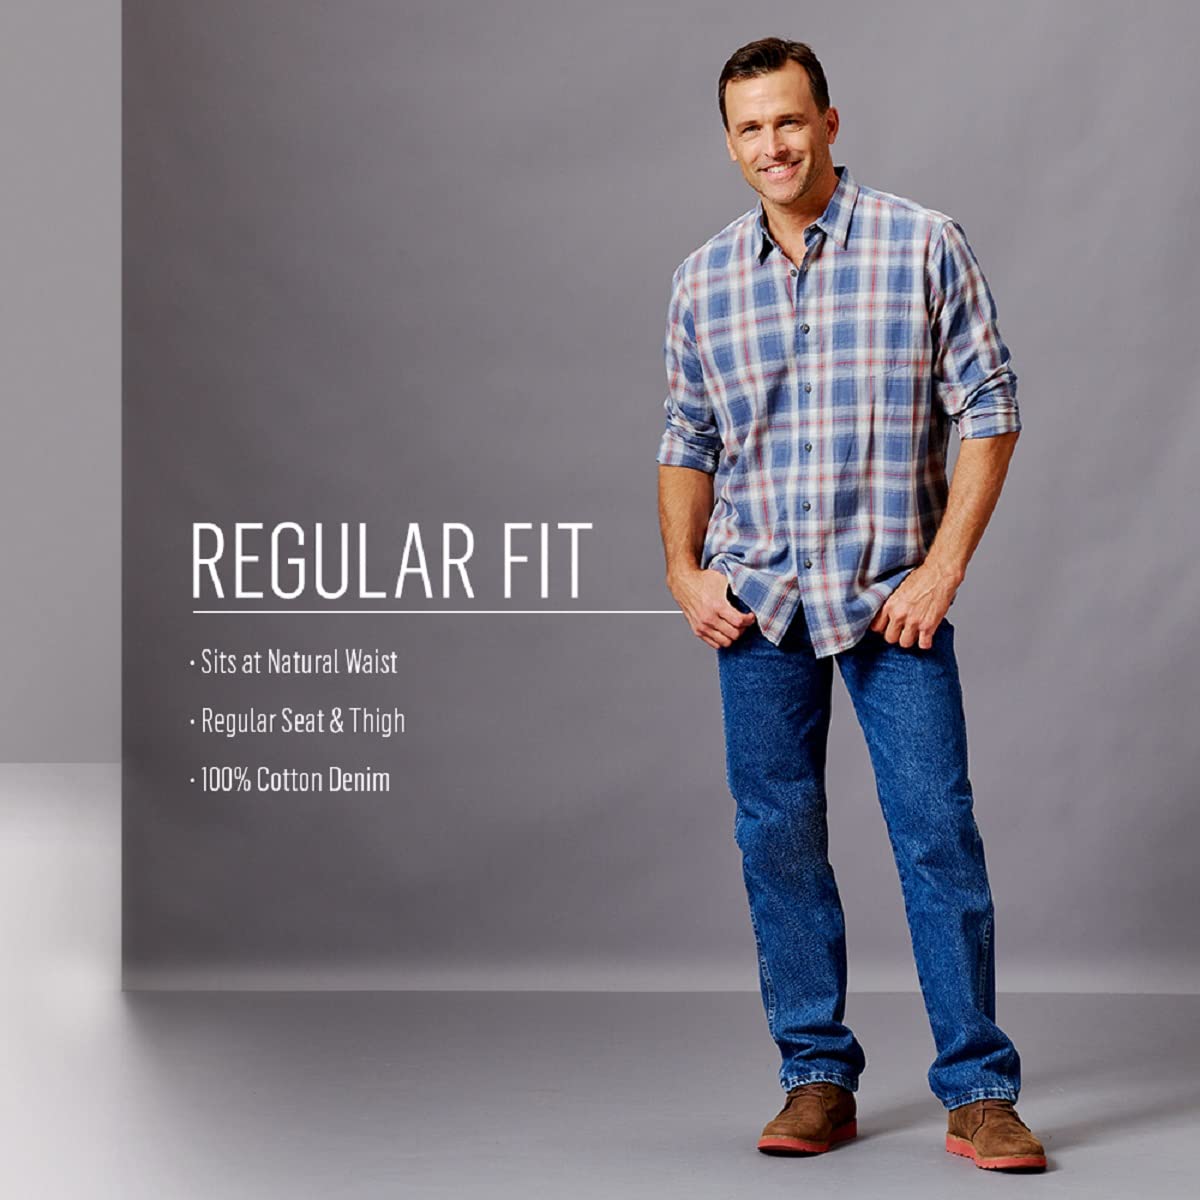 Wrangler Authentics Men's Classic 5-Pocket Regular Fit Cotton Jean, Dark Rinse, 32W x 29L